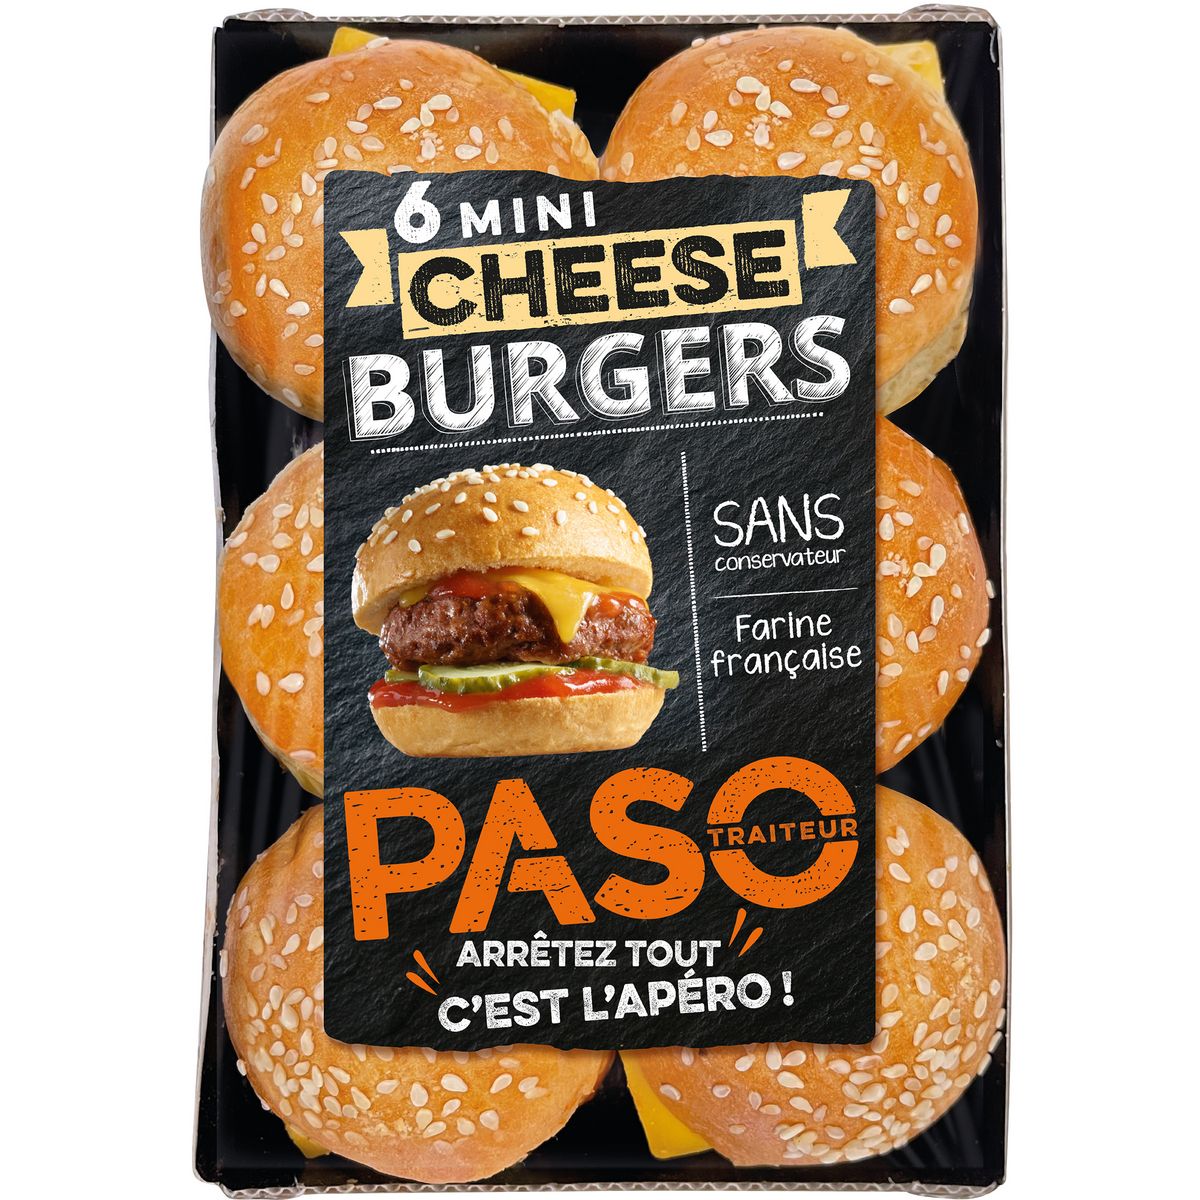 PASO Mini cheese burgers 6 pièces 210g